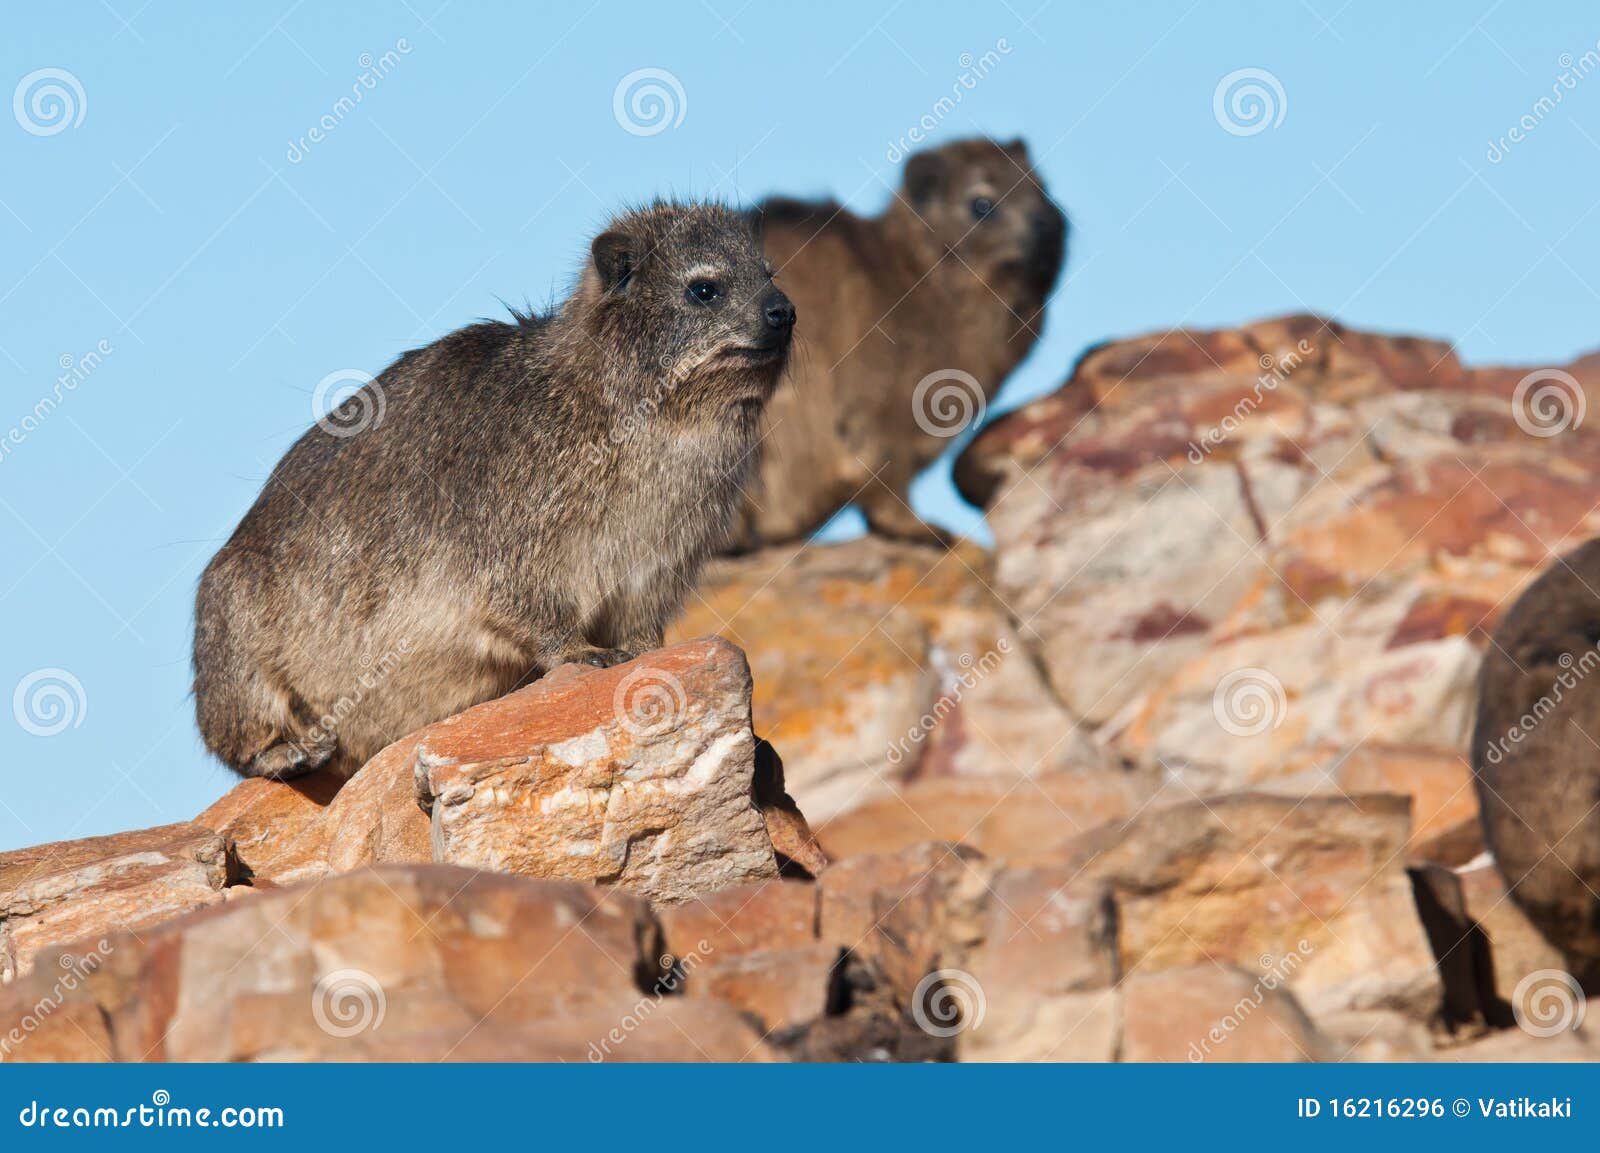 cape hyrax sitting on a rock